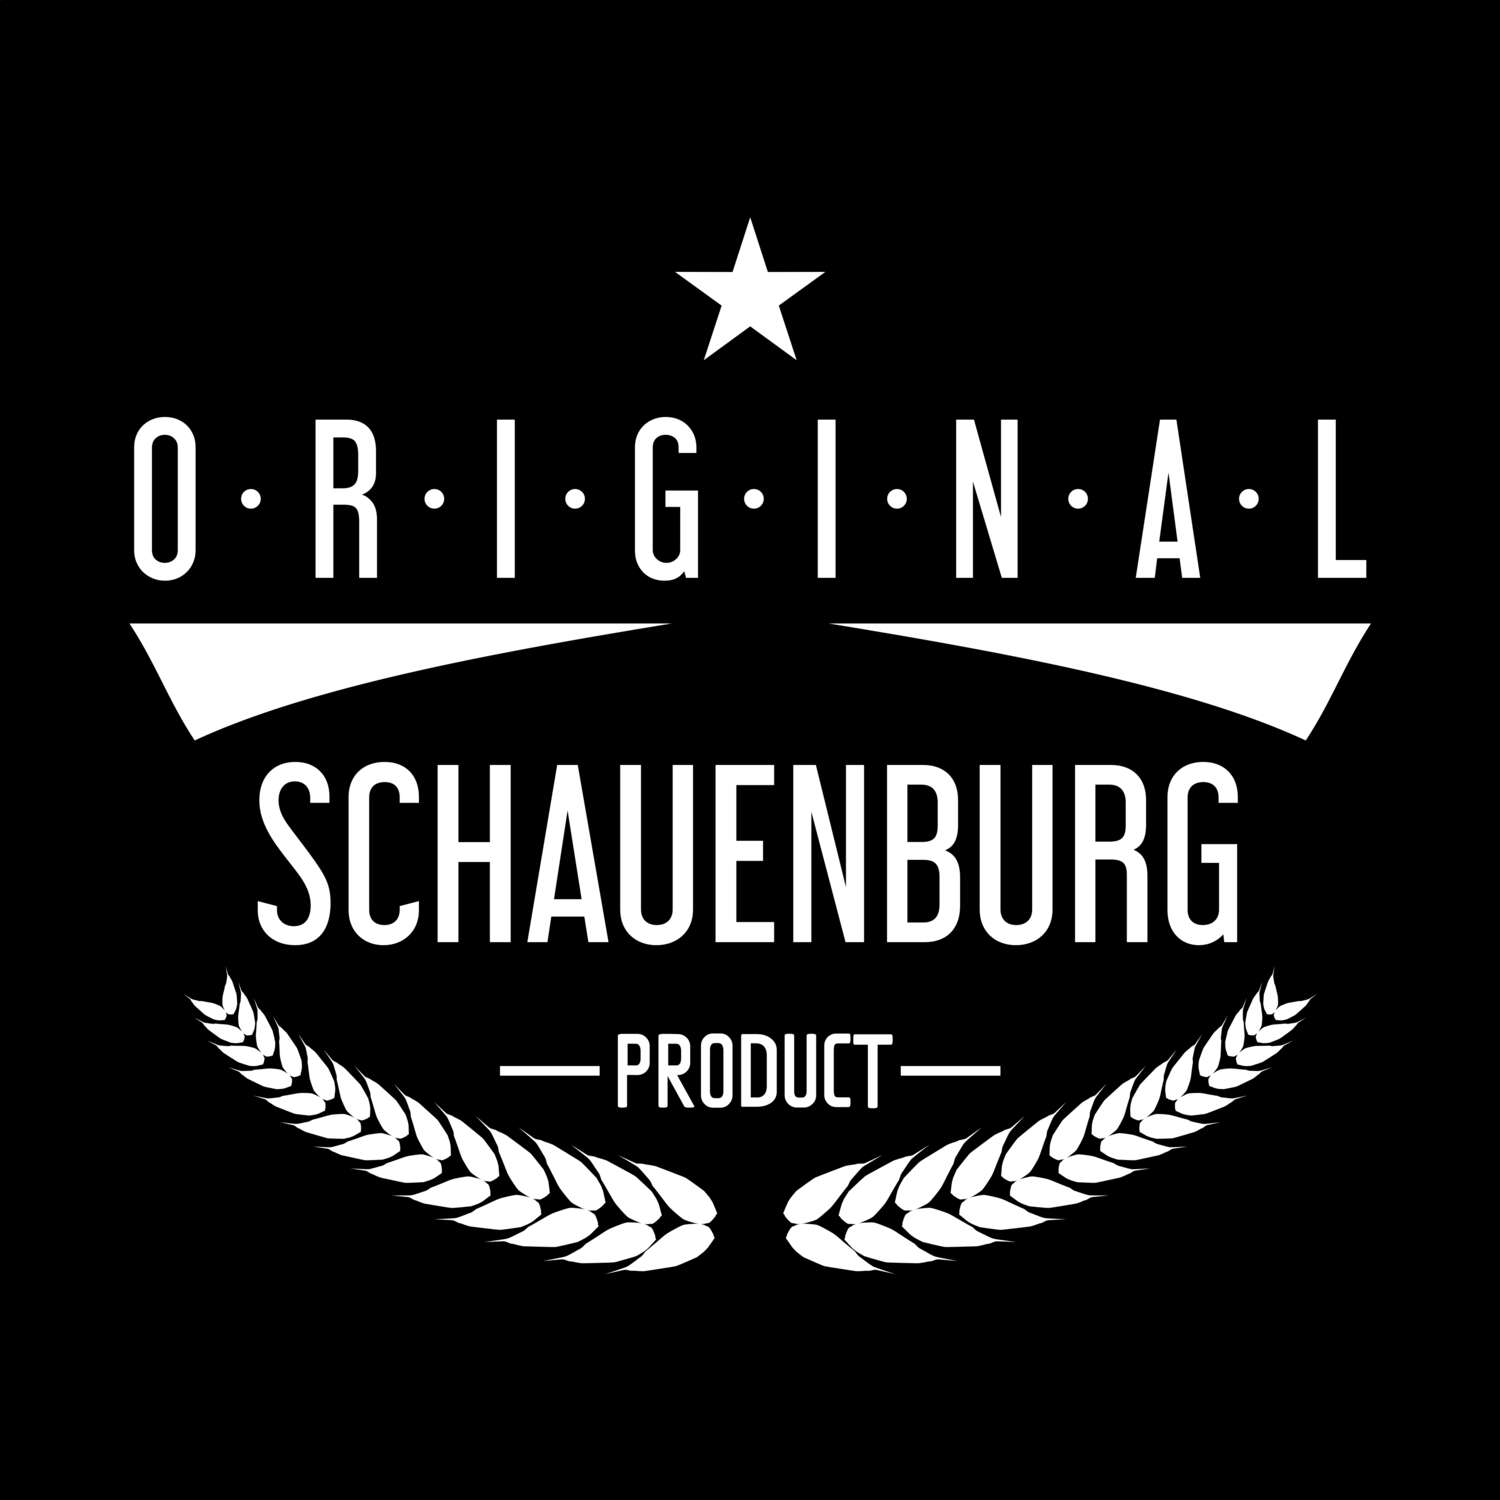 Schauenburg T-Shirt »Original Product«